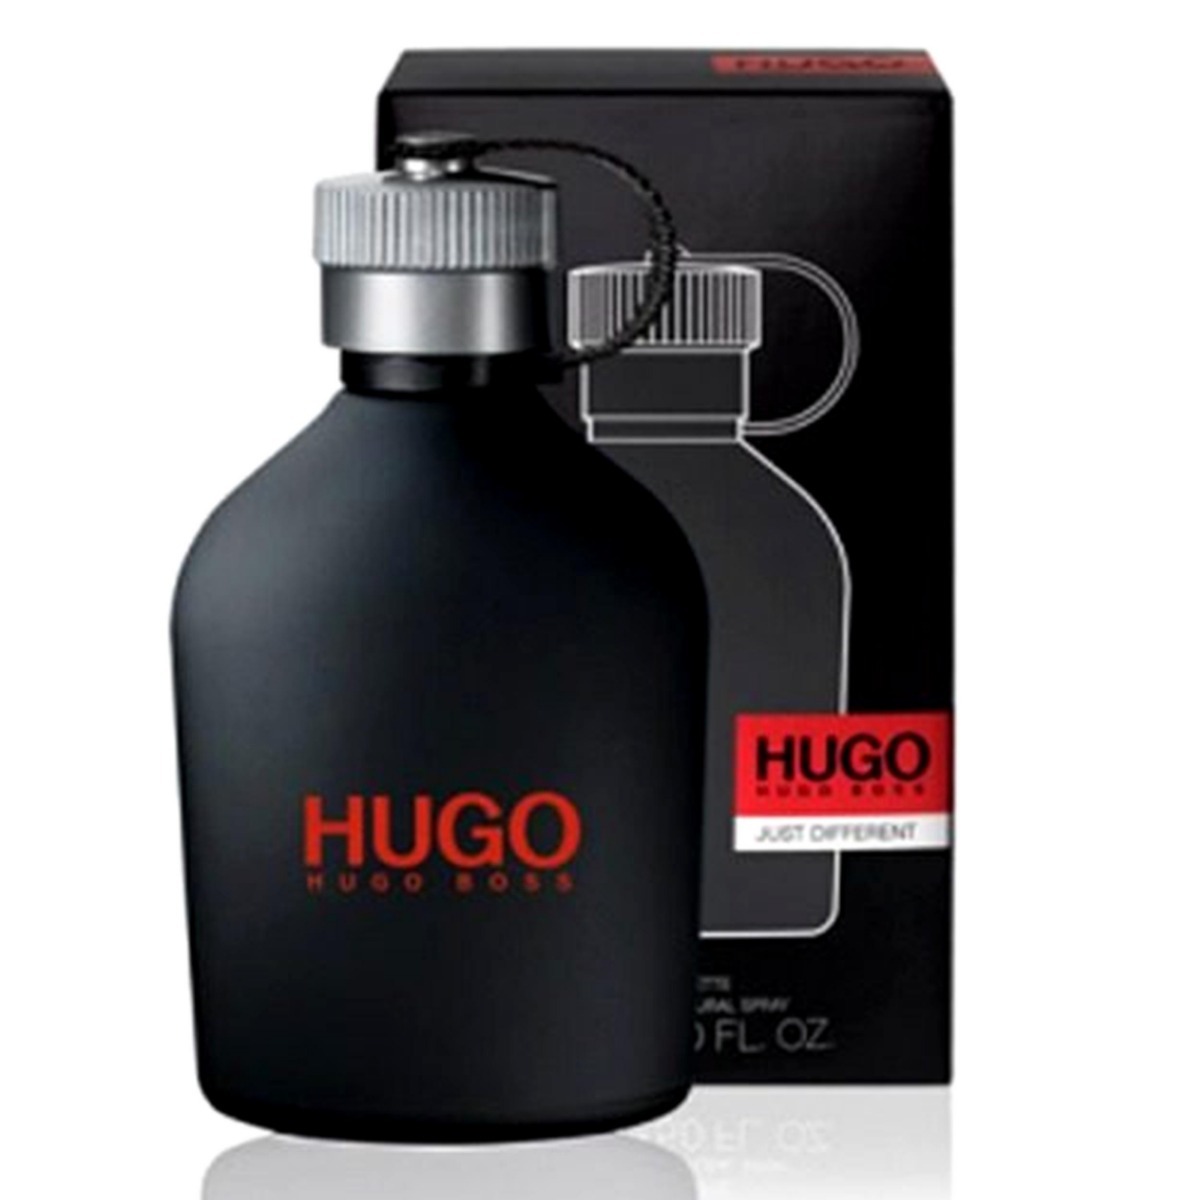 Вода хьюго босс мужские. Hugo Boss just different 75мл. Hugo Boss just different 150 мл. Hugo "Hugo Boss just different" 100 ml. Hugo Boss Hugo Boss Hugo man туалетная вода 100.